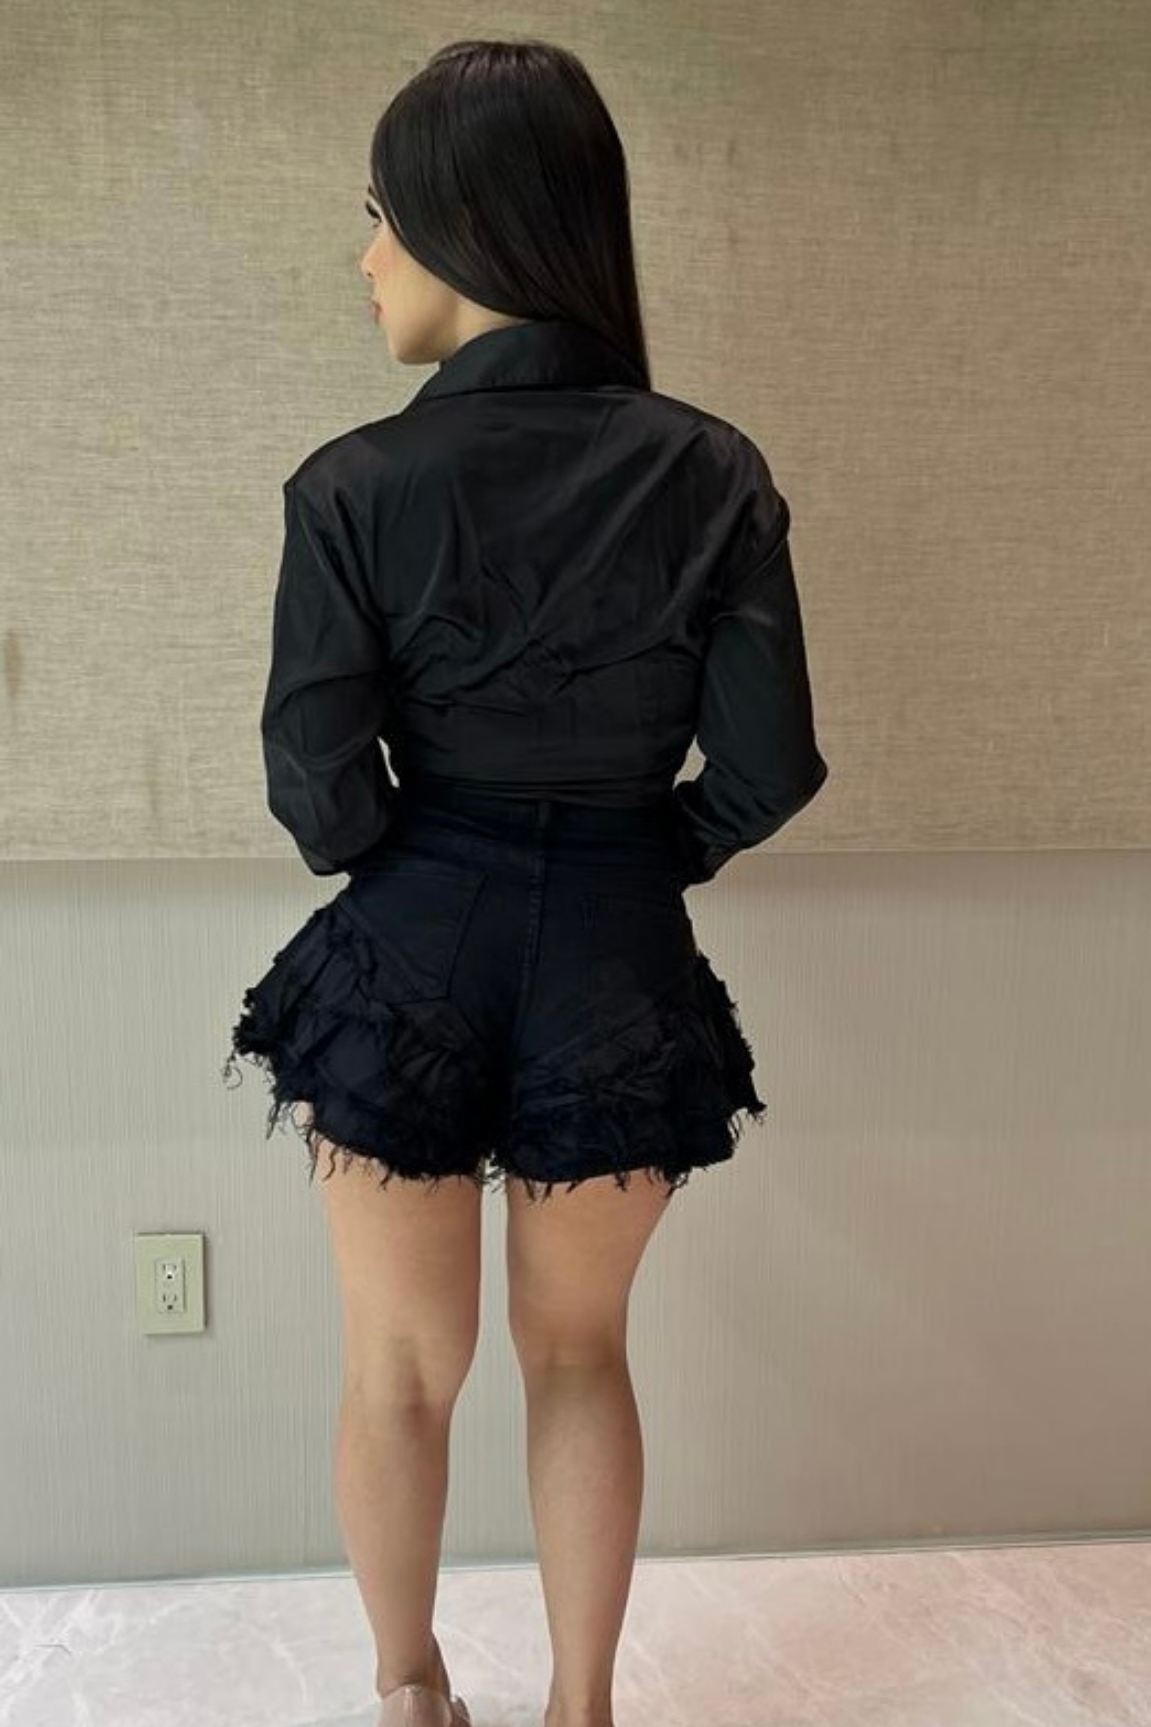 Sexy Black Shorts